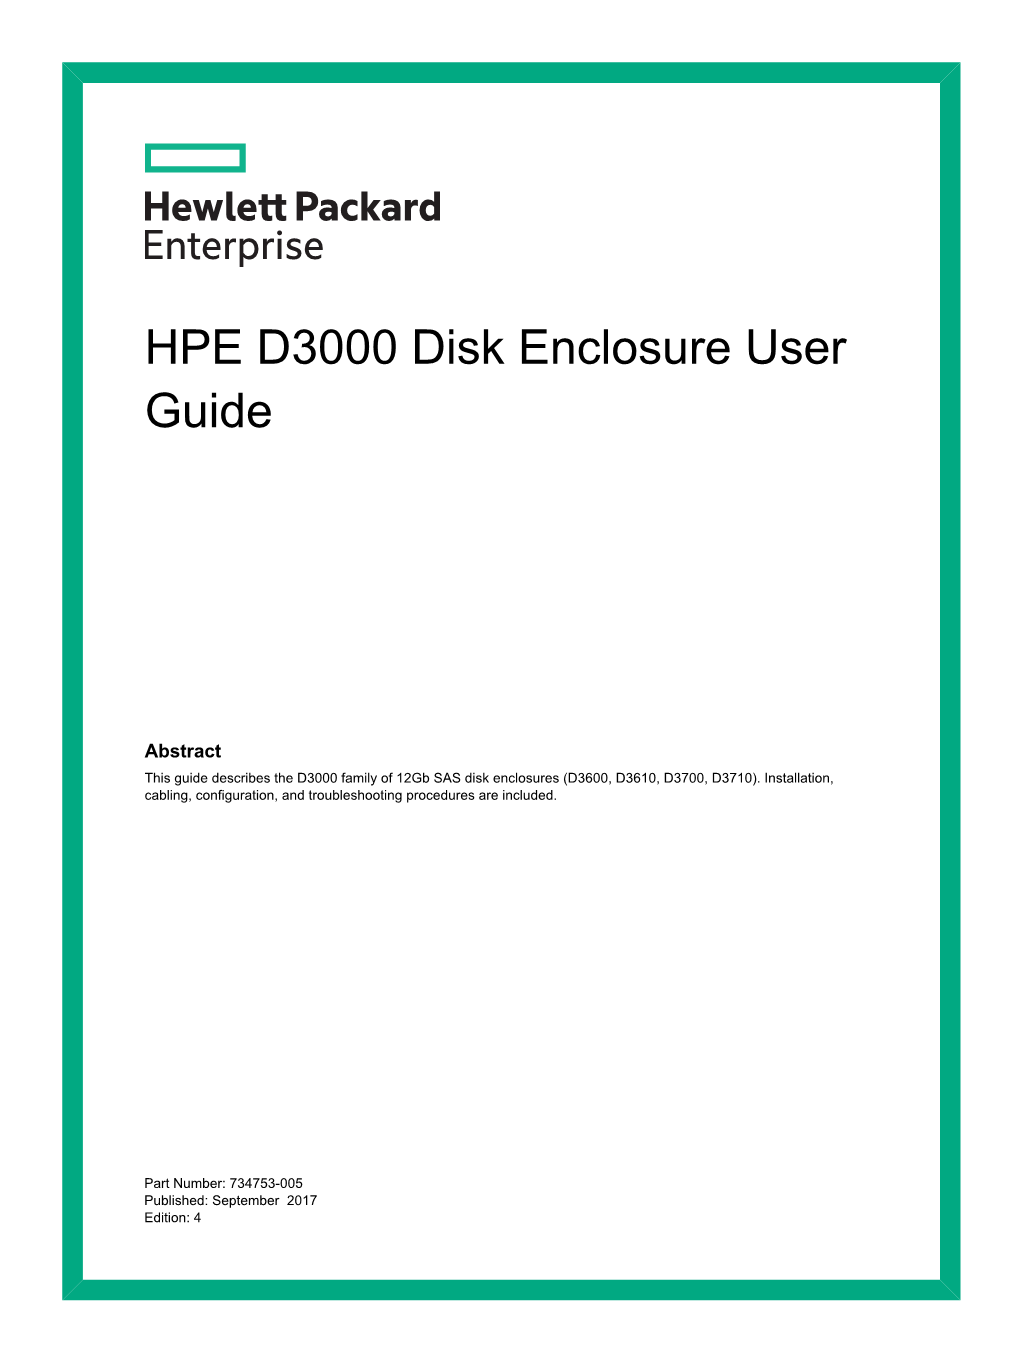 HPE D3600/D3700 Disk Enclosure User Guide